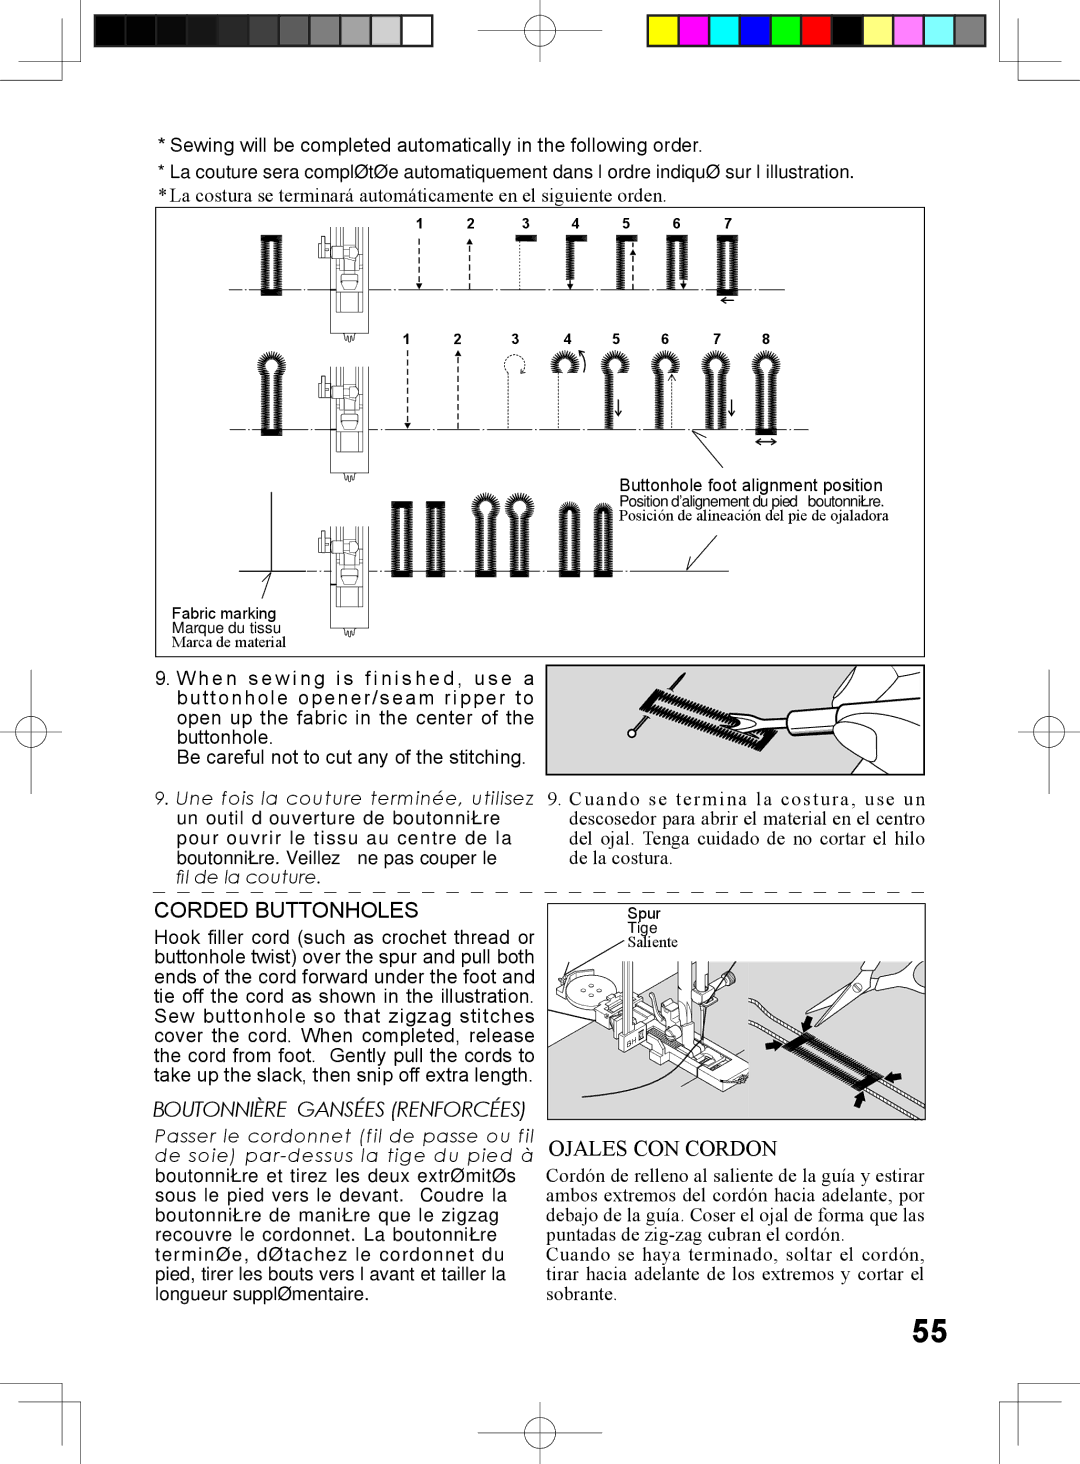 Singer 5400 instruction manual Corded Buttonholes, Ojales CON Cordon 